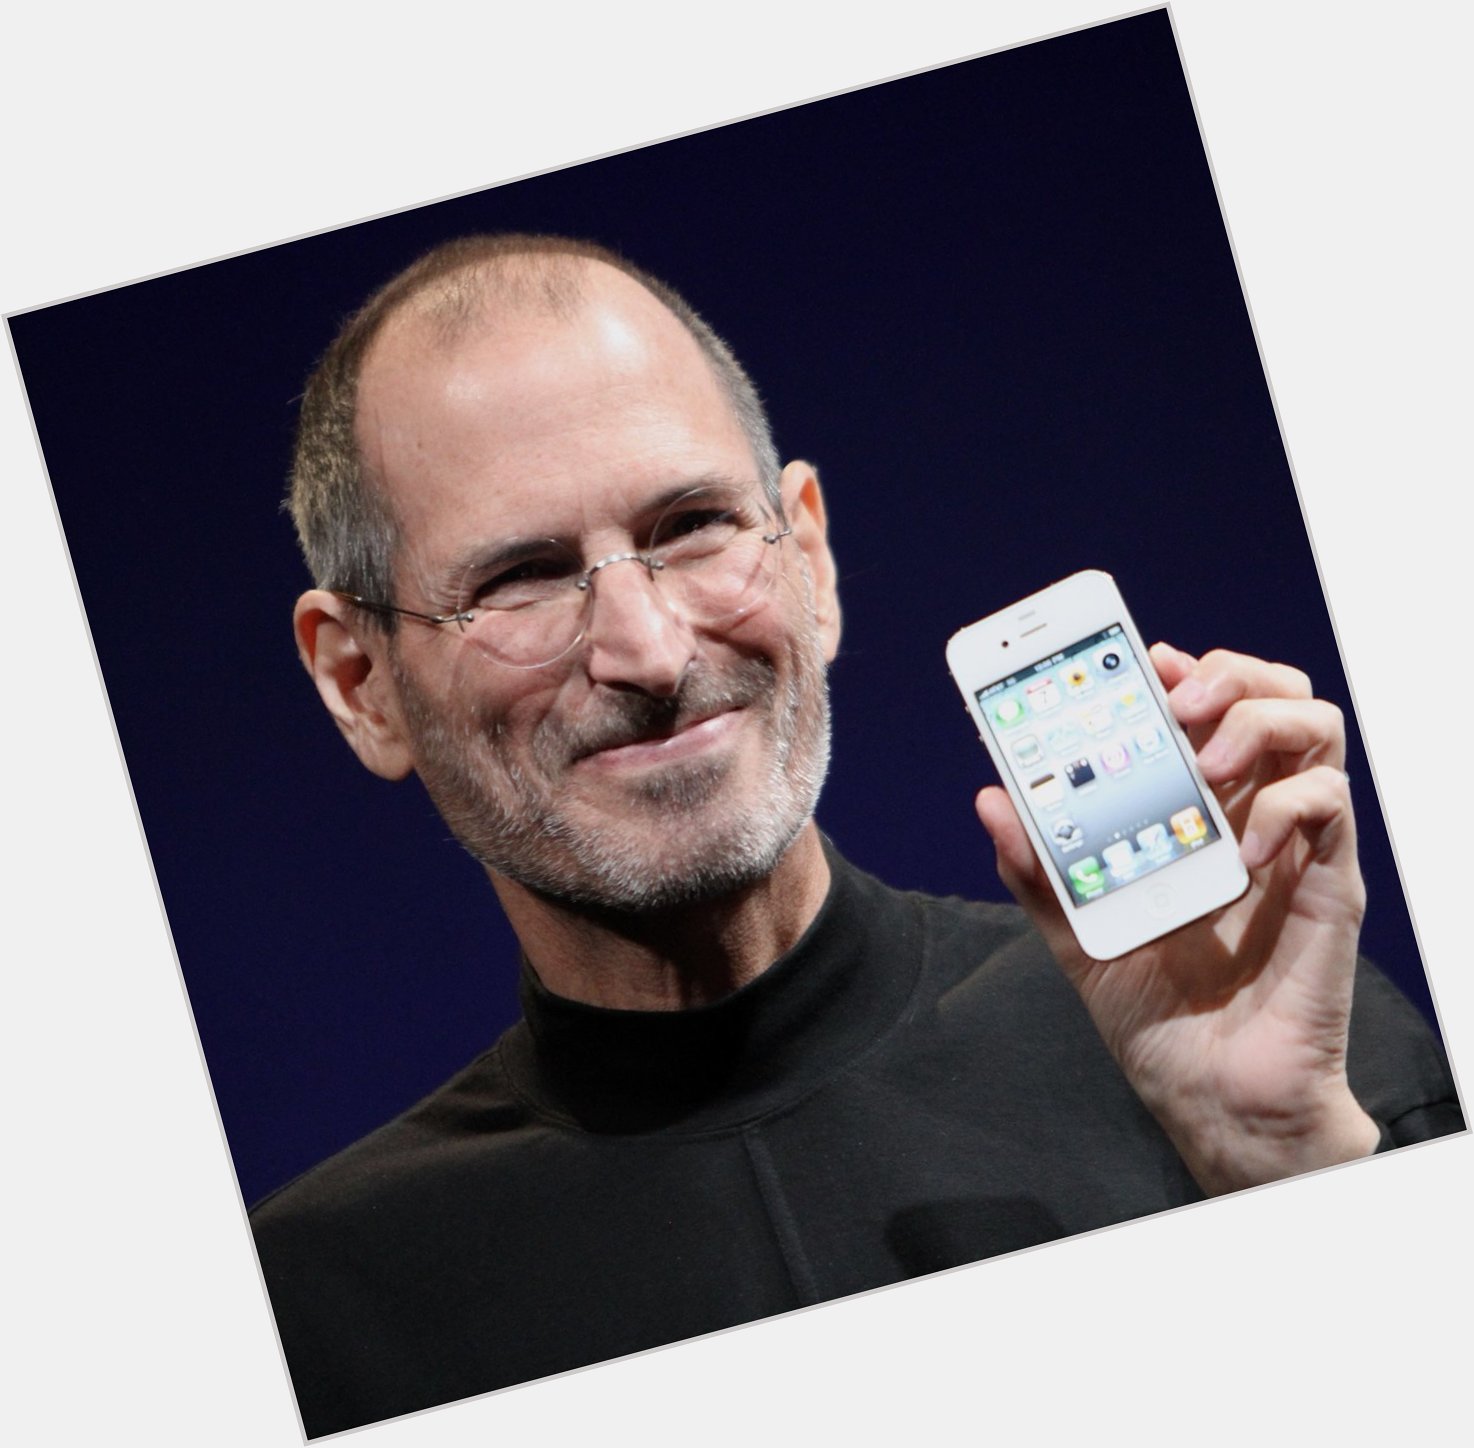 Happy birthday, Steve Jobs. We really miss your innovative spirit. 